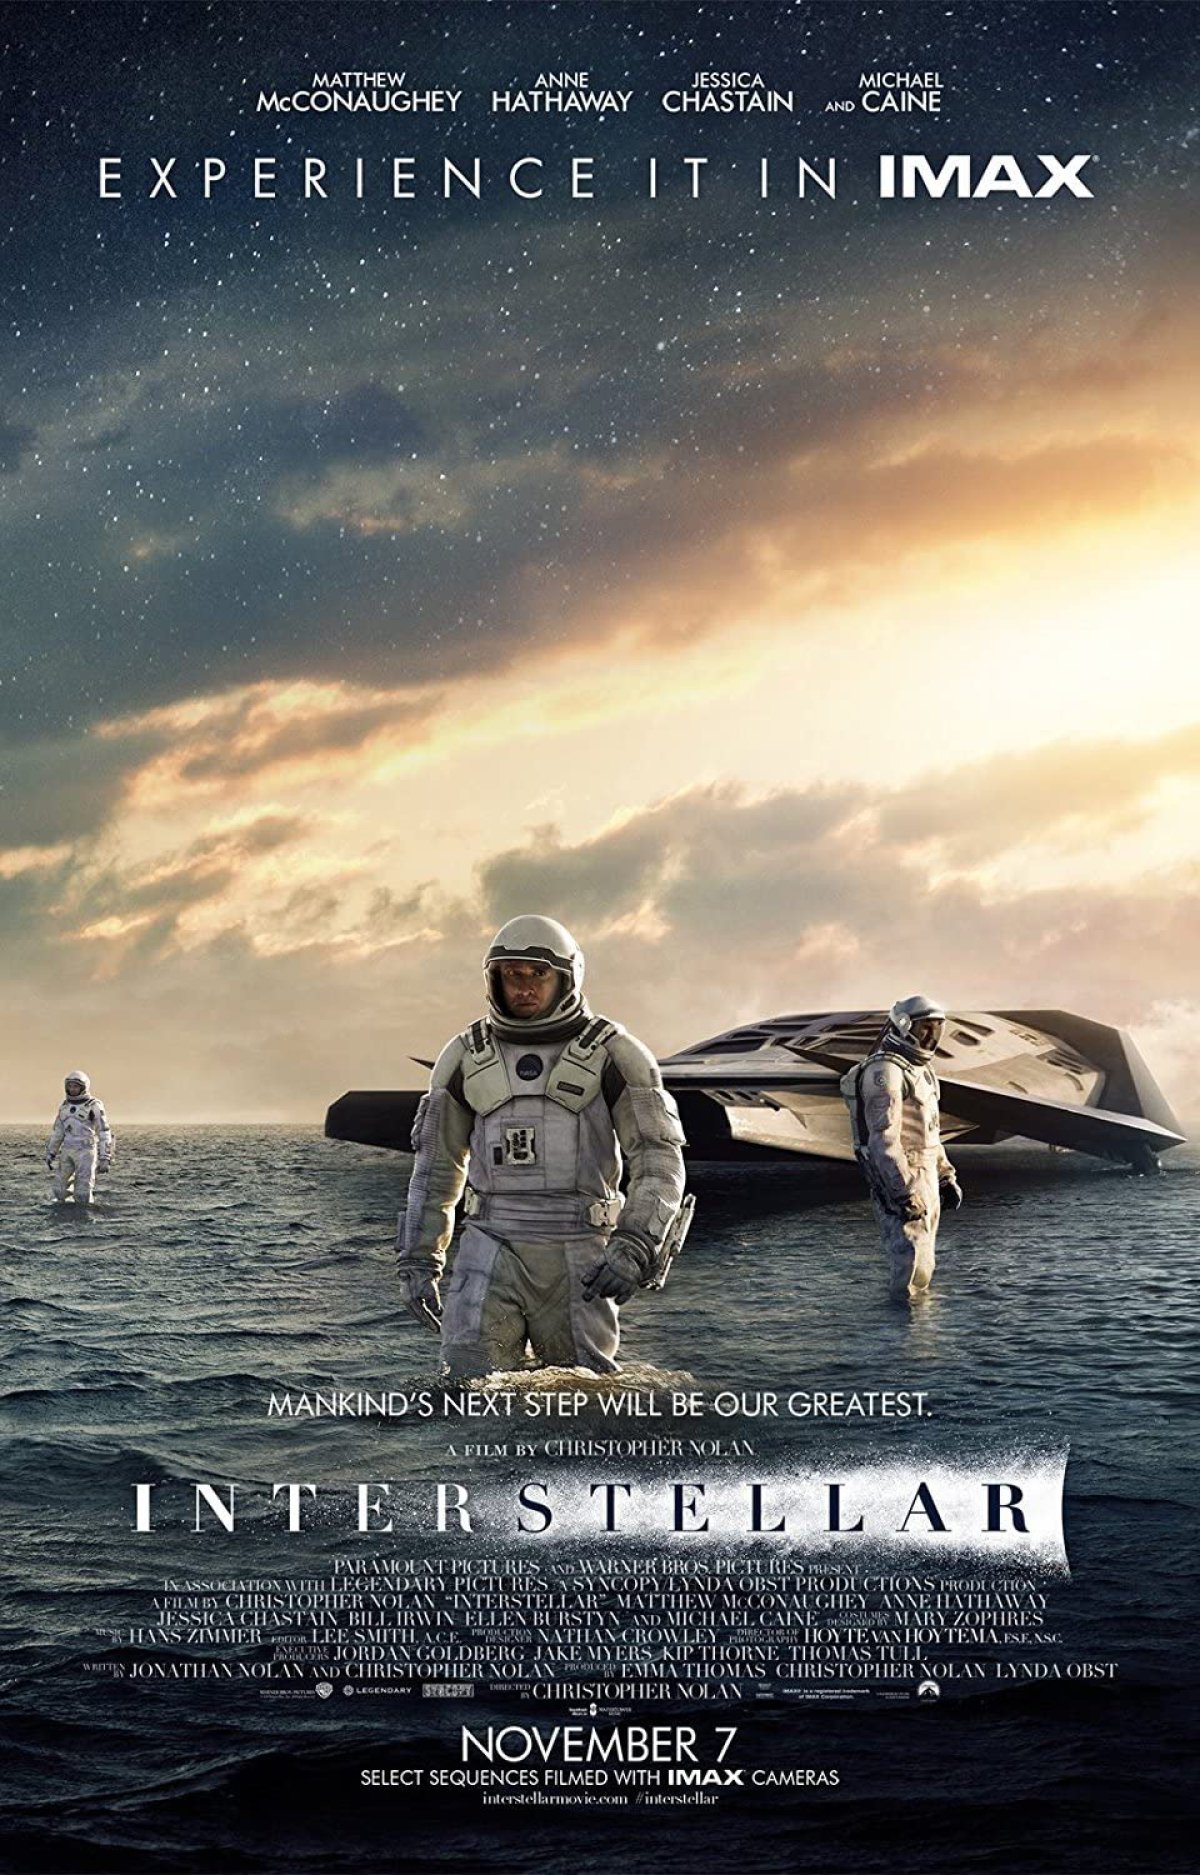 Imagen promocional de &#039;Interstellar&#039;